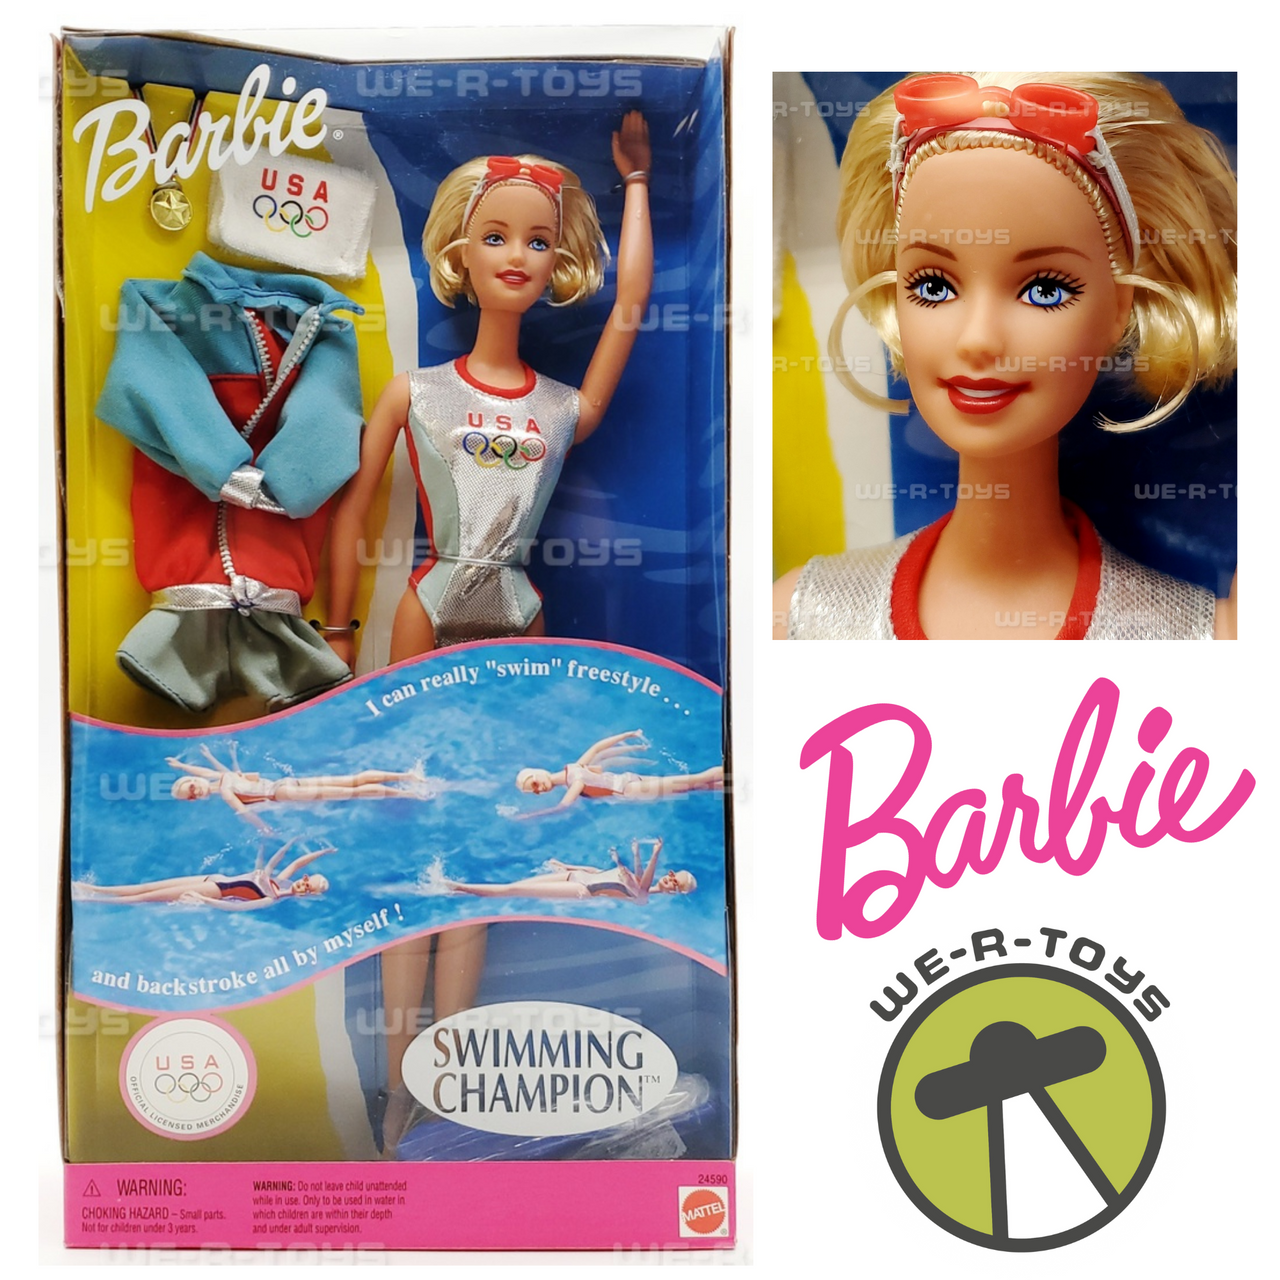 USA Olympics Swimming Champion Barbie Doll 1999 Mattel 24590 - We-R-Toys